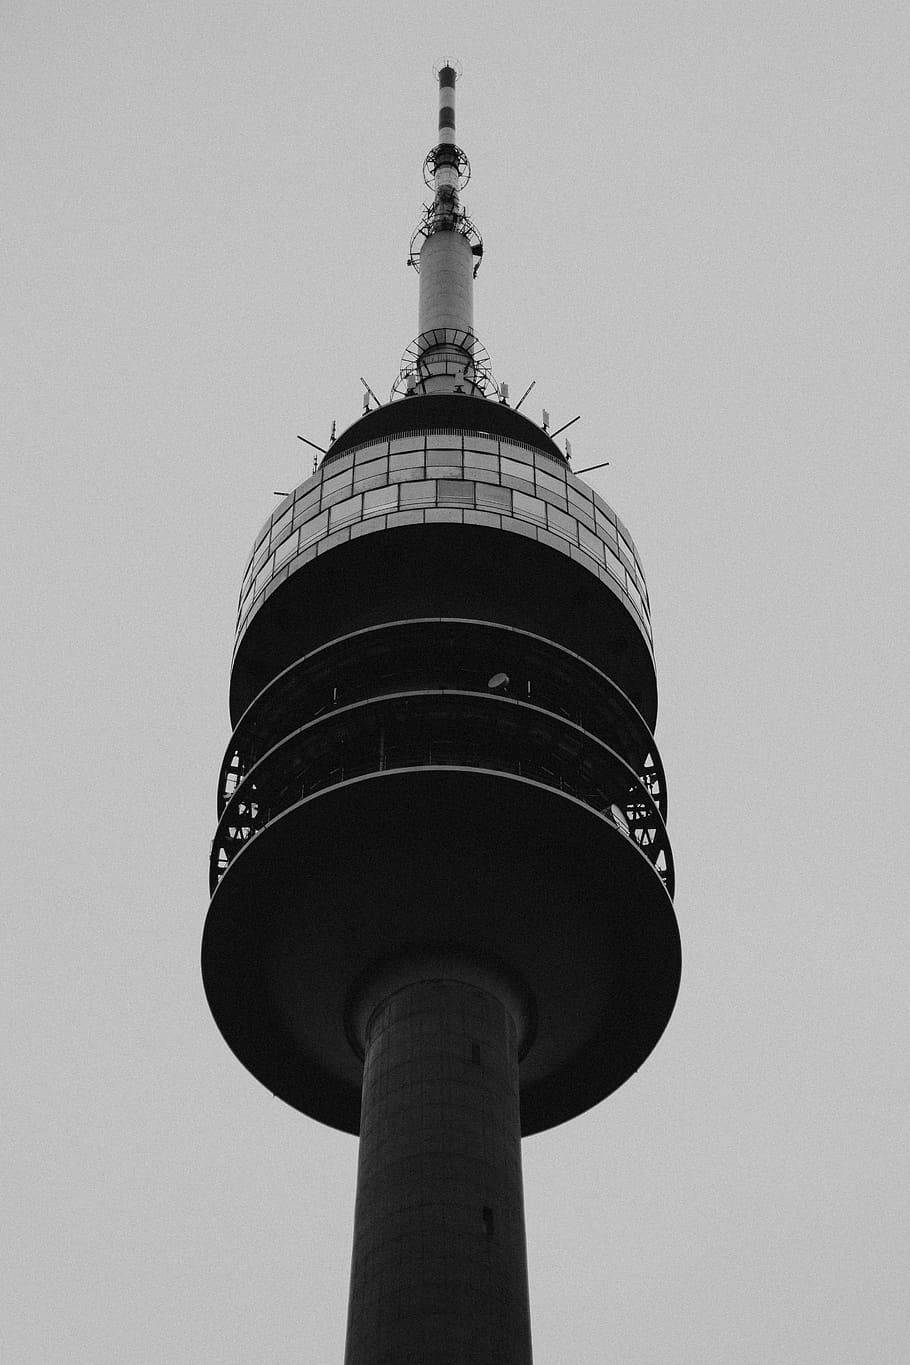 Olympiaturm In Munich Germany Picture